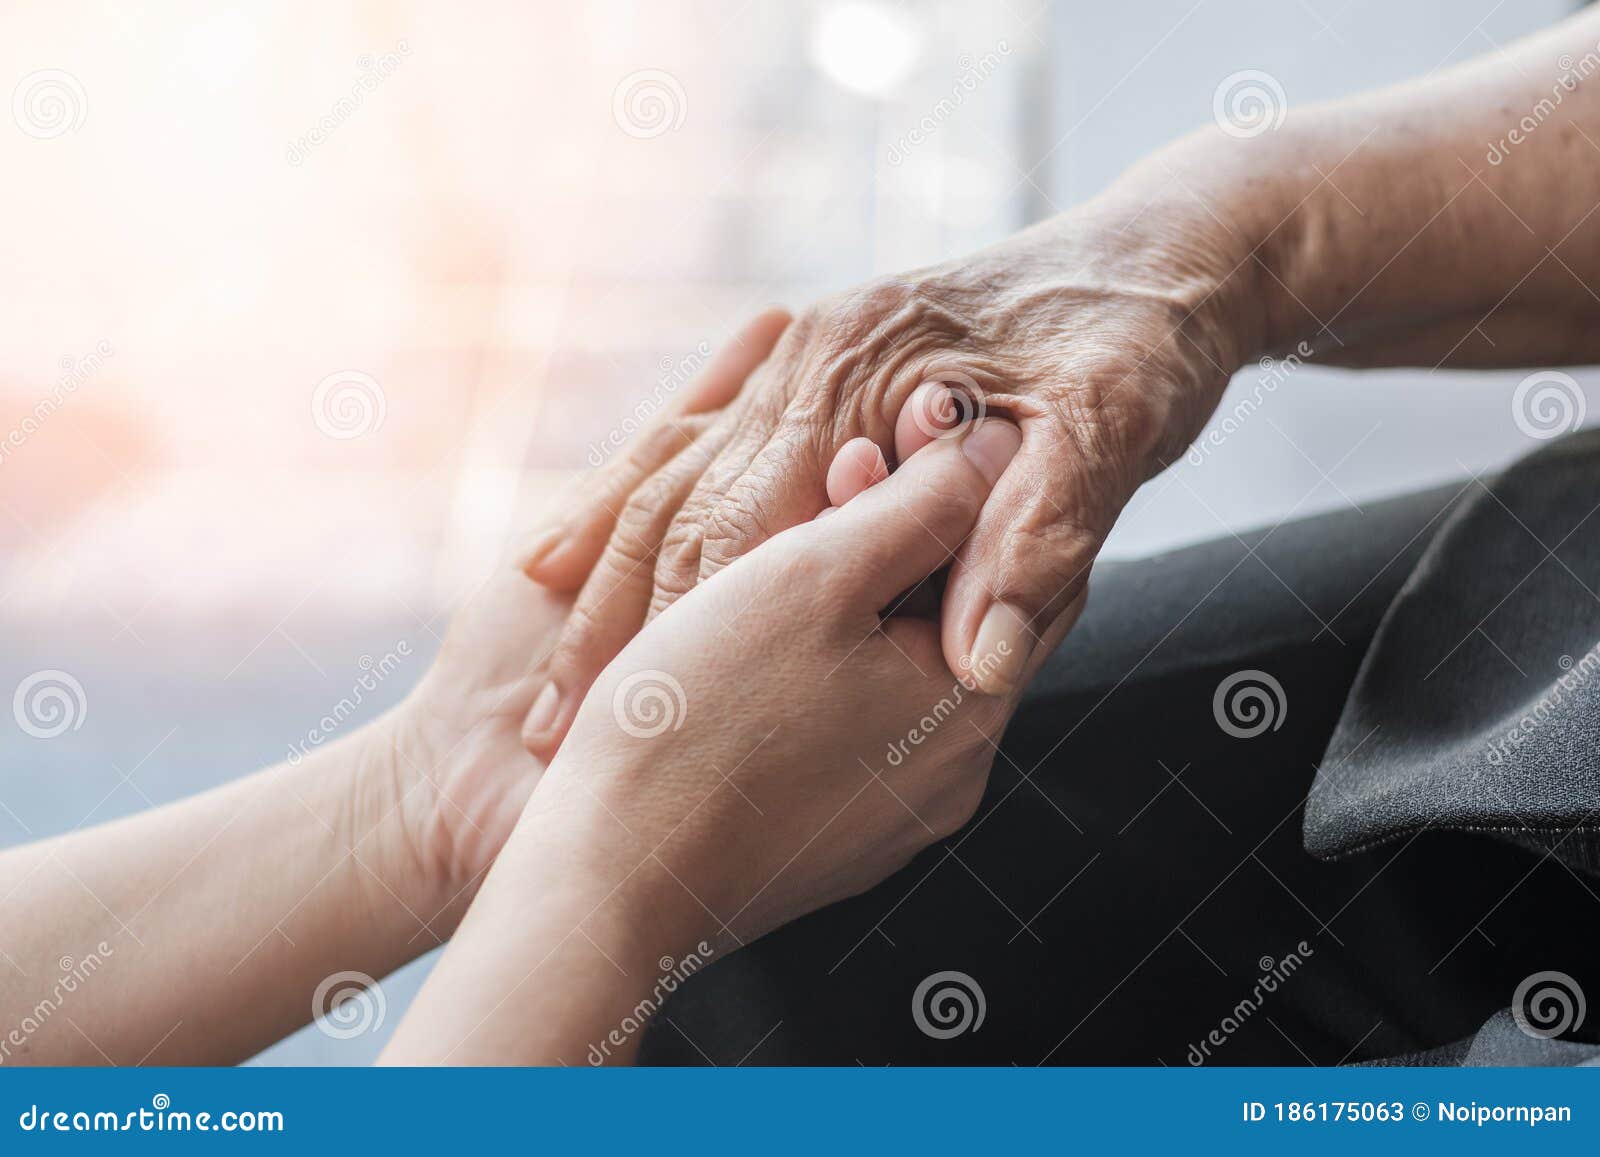 parkinson disease patient, alzheimer elderly senior, arthritis person hand in support of nursing family caregiver care